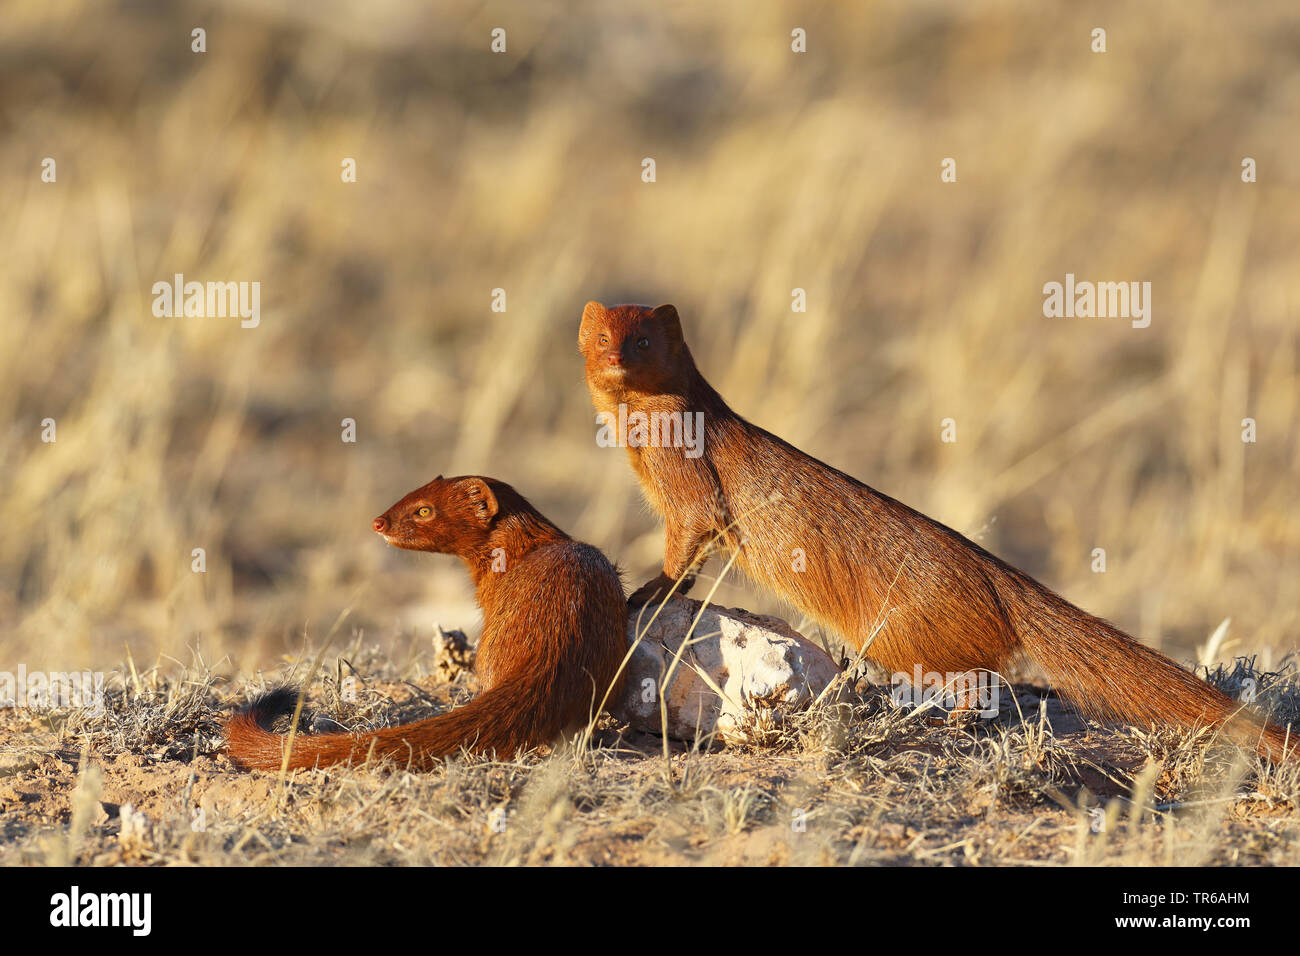 Schlanke mongoose (Galerella sanguinea), Paar in der Savanne, Südafrika, Nordkap, Kgalagadi Transfrontier National Park Stockfoto